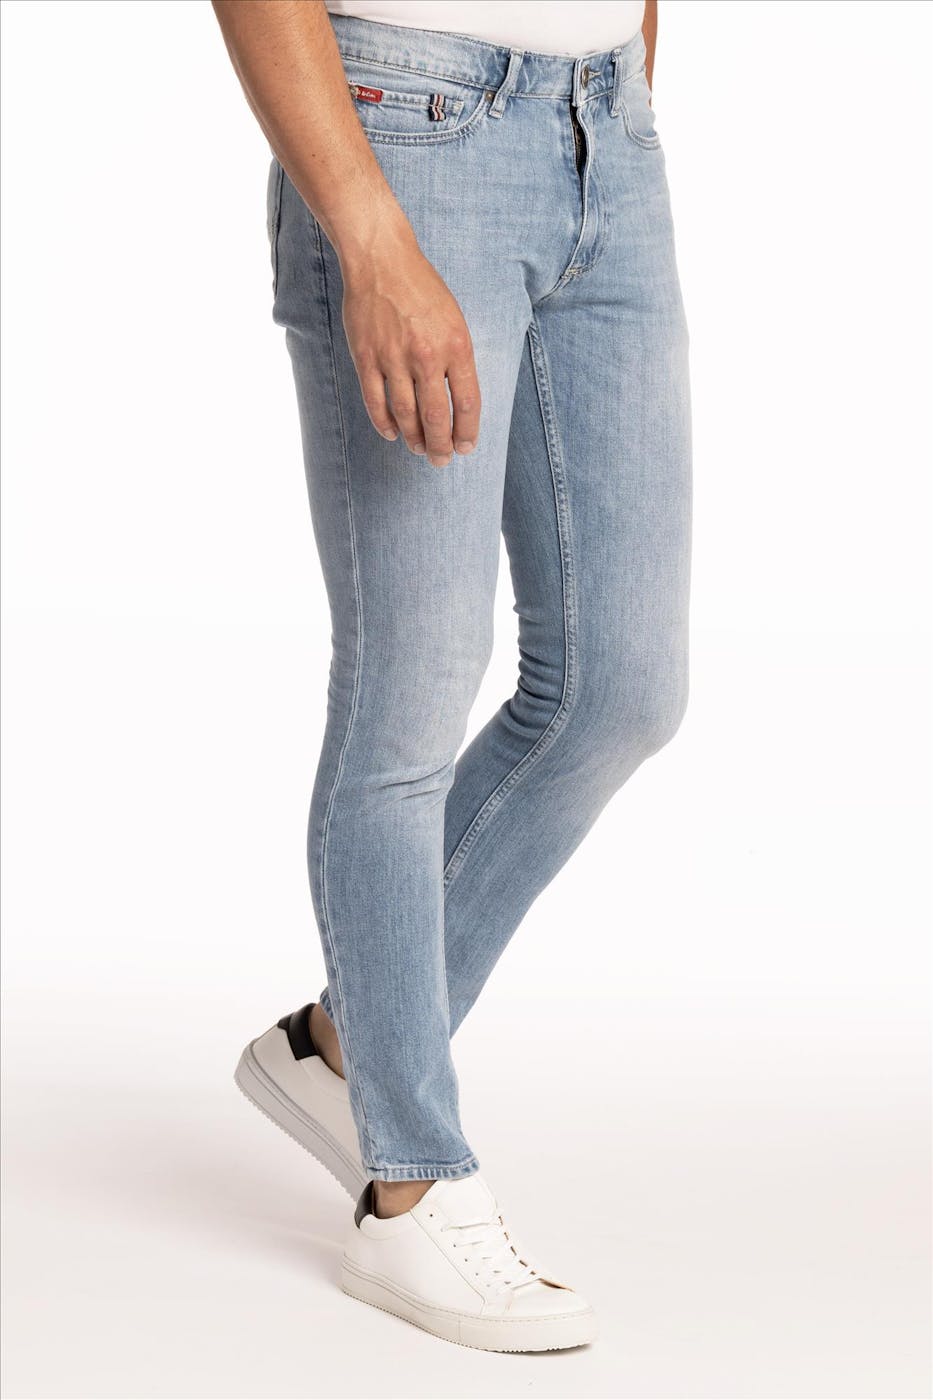 Lee Cooper - Lichtblauwe LC104ZP skinny jeans